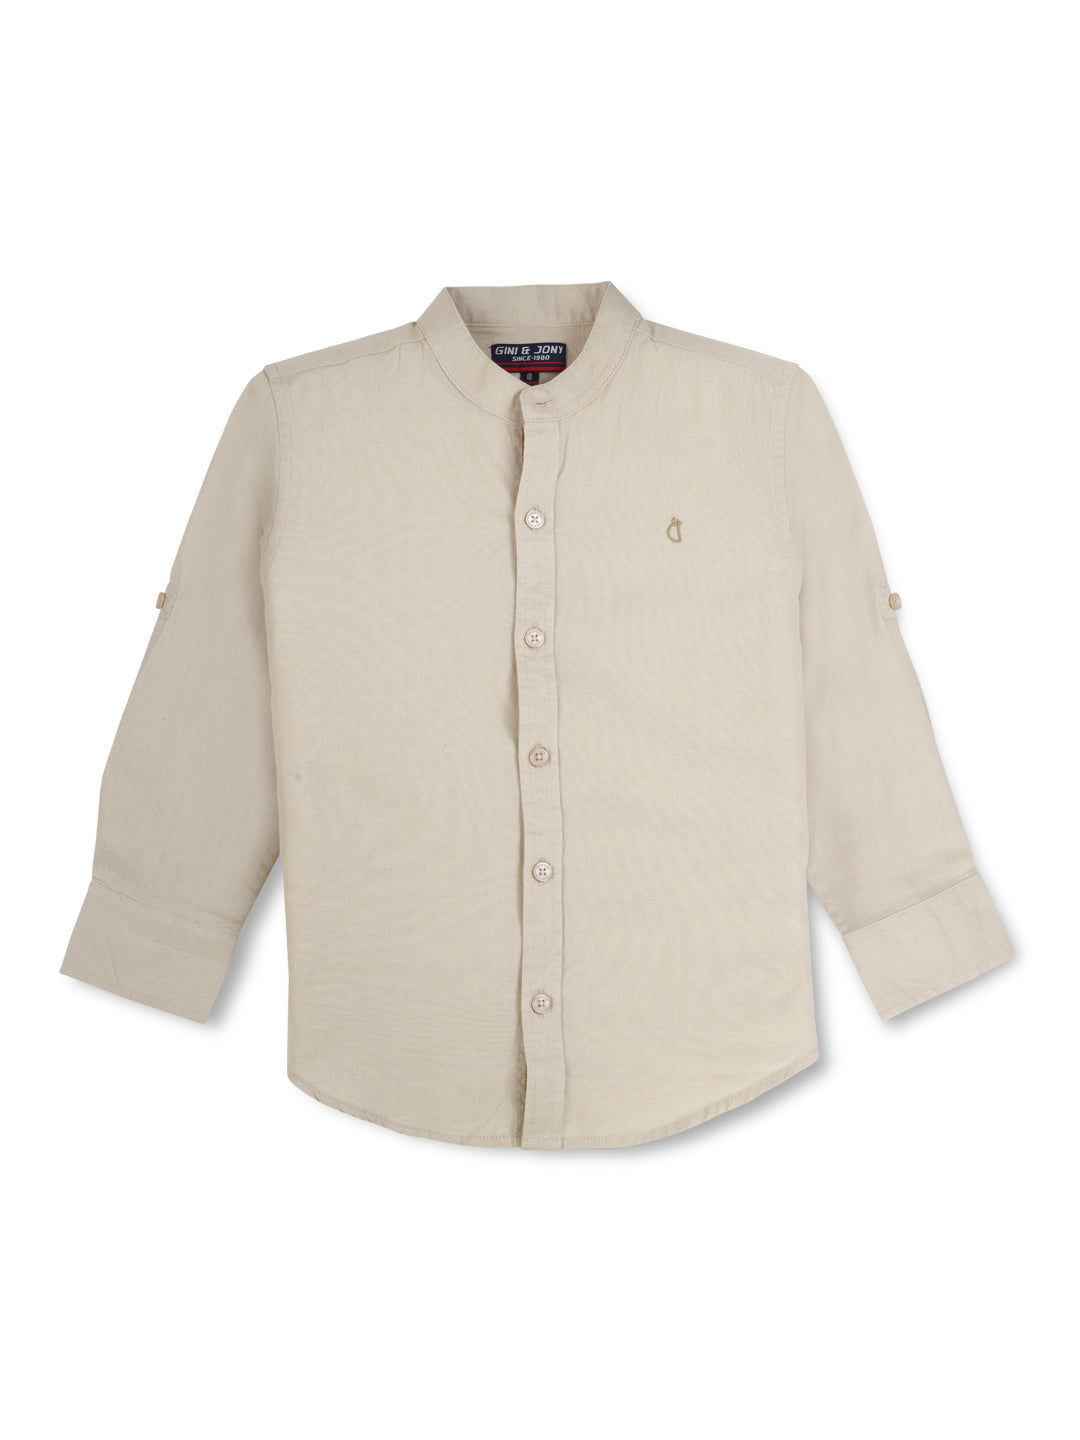 Boys Cream Solid Cotton Shirt Full Sleeves